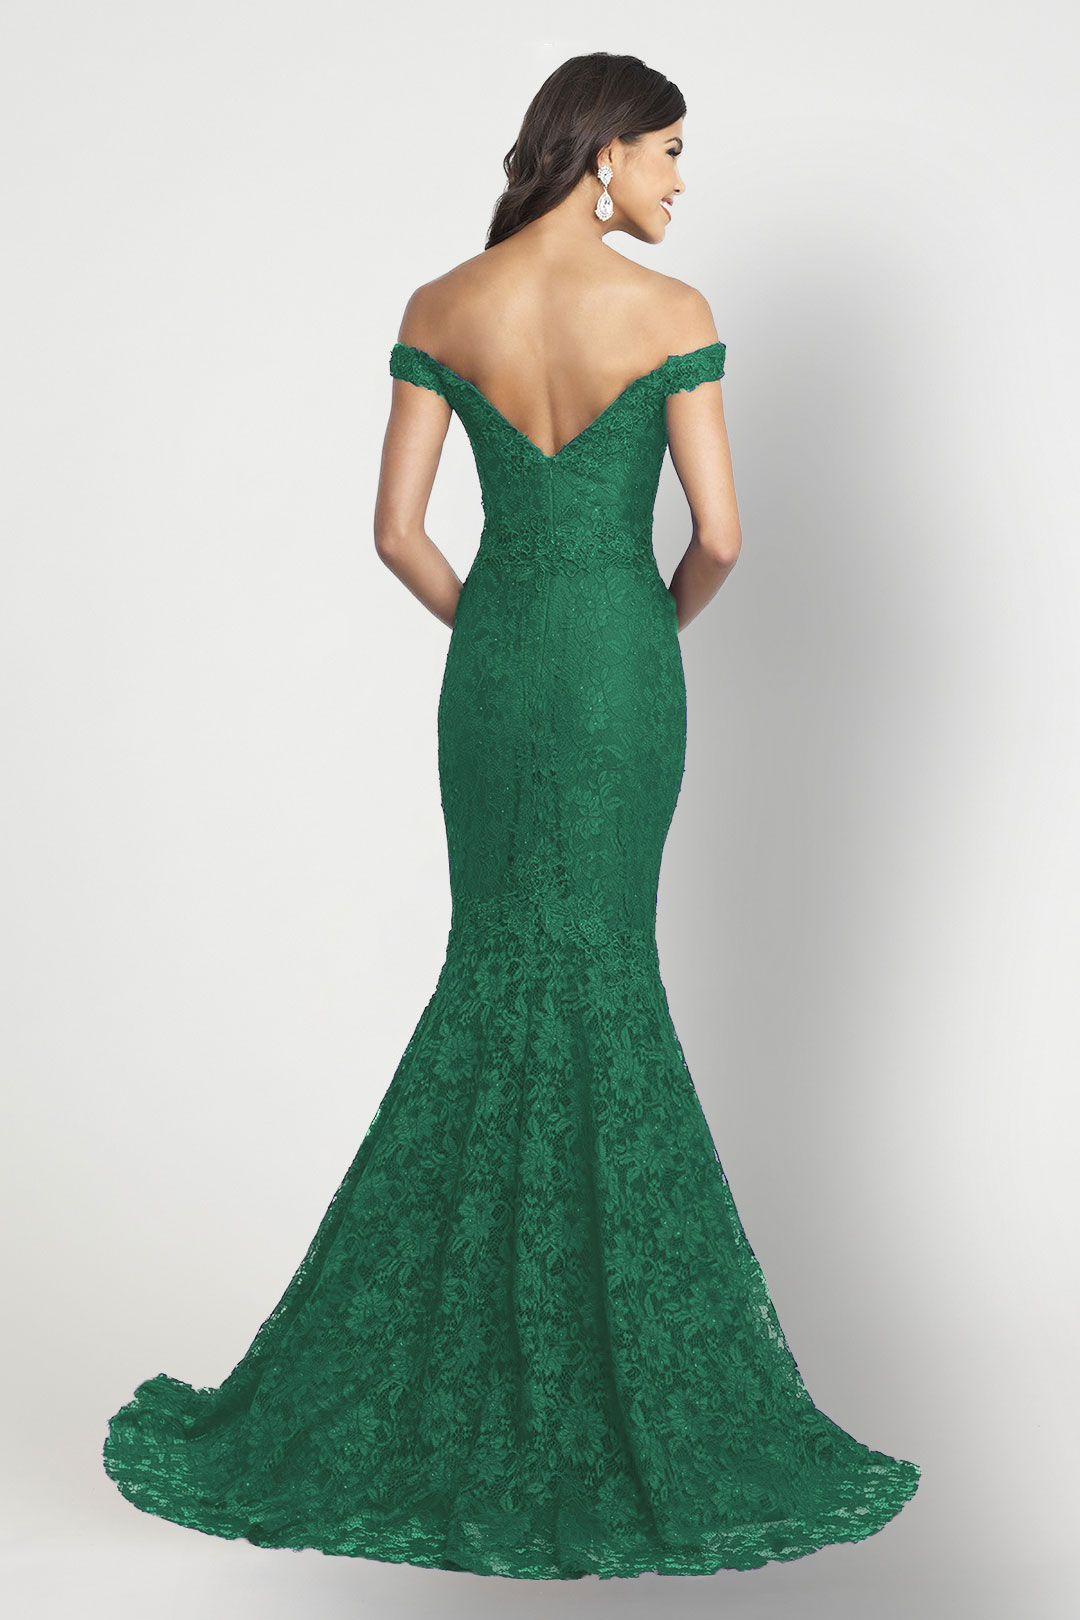 Emerald Cap Sleeved Gown - Blush Prom Dress Rental